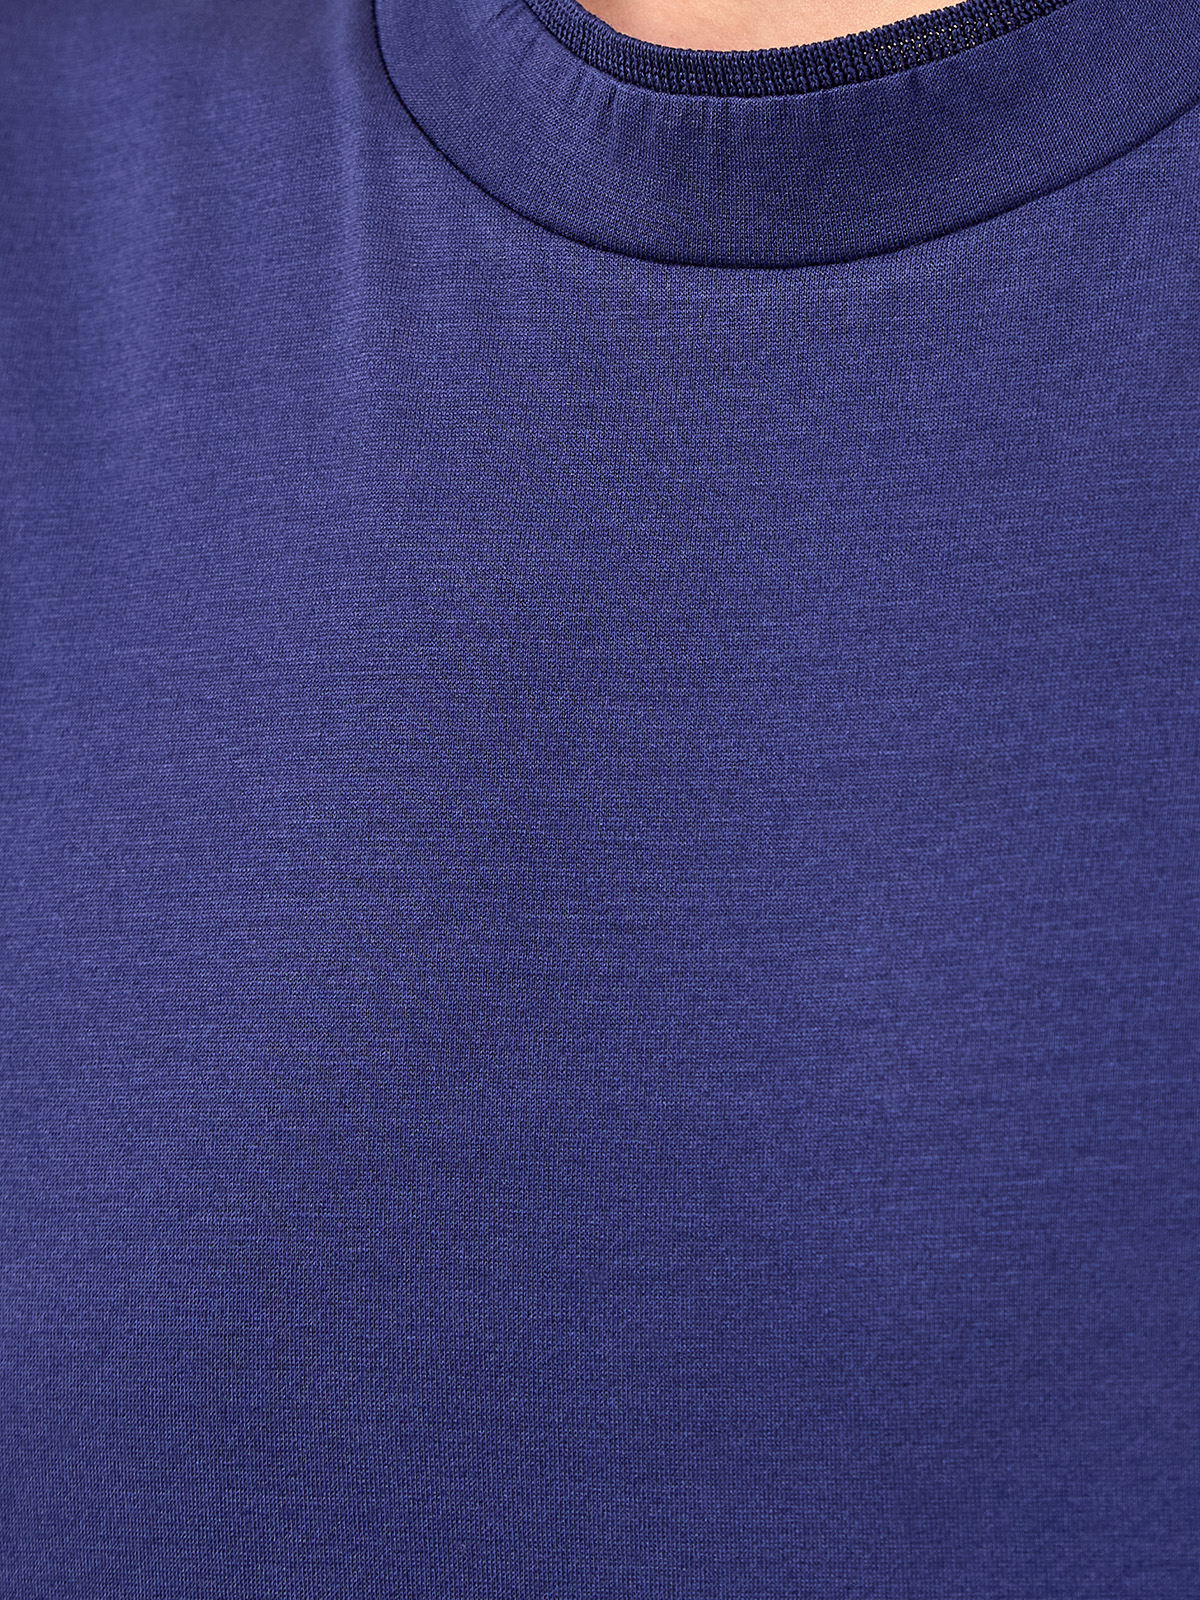 Однотонная футболка из гладкого хлопкового джерси CANALI, цвет синий, размер 50;52;54;56;58;60;62;48 - фото 5